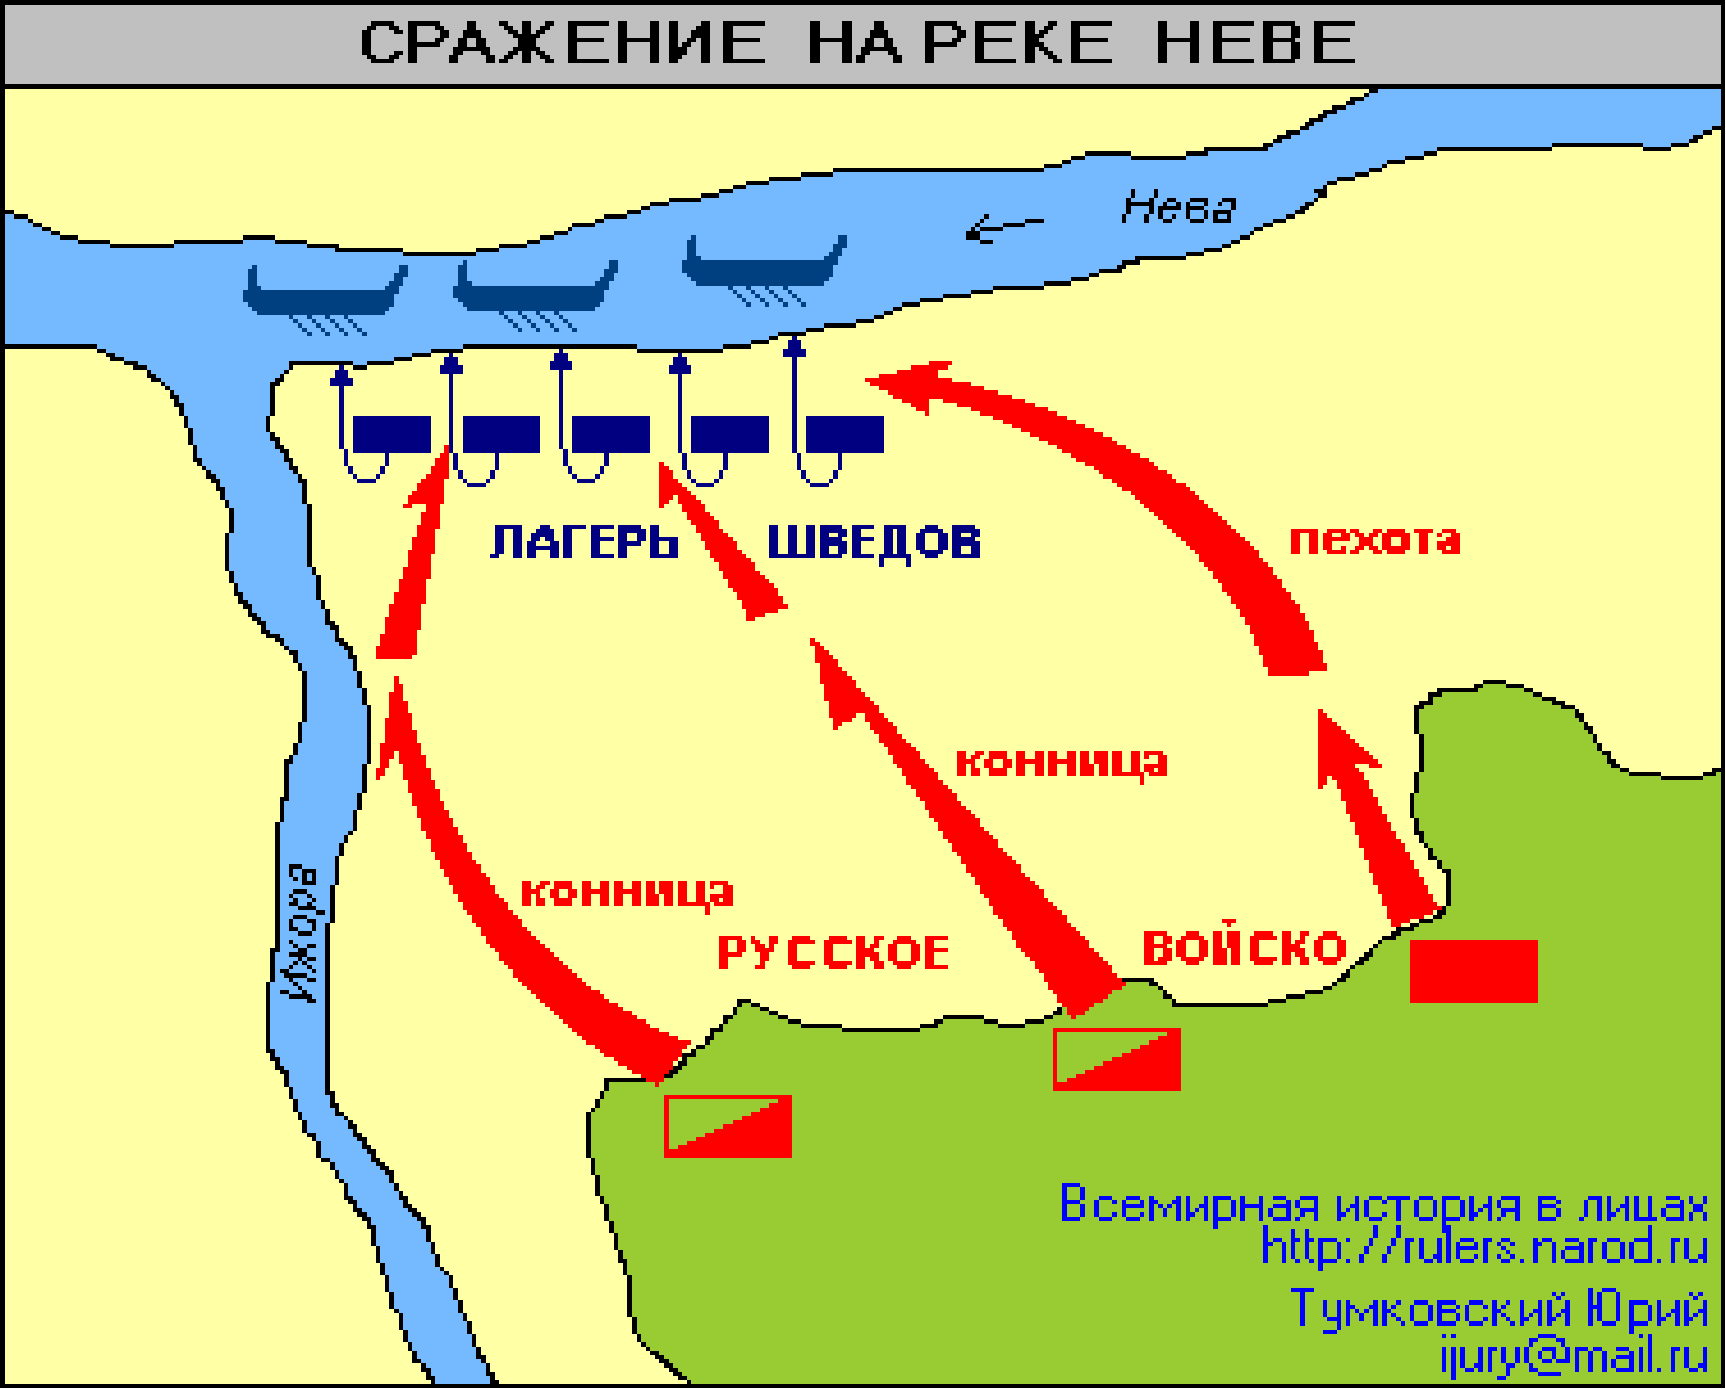 Battle river. Схема битвы на реке Неве. Битва на реке Неве схема сражений.